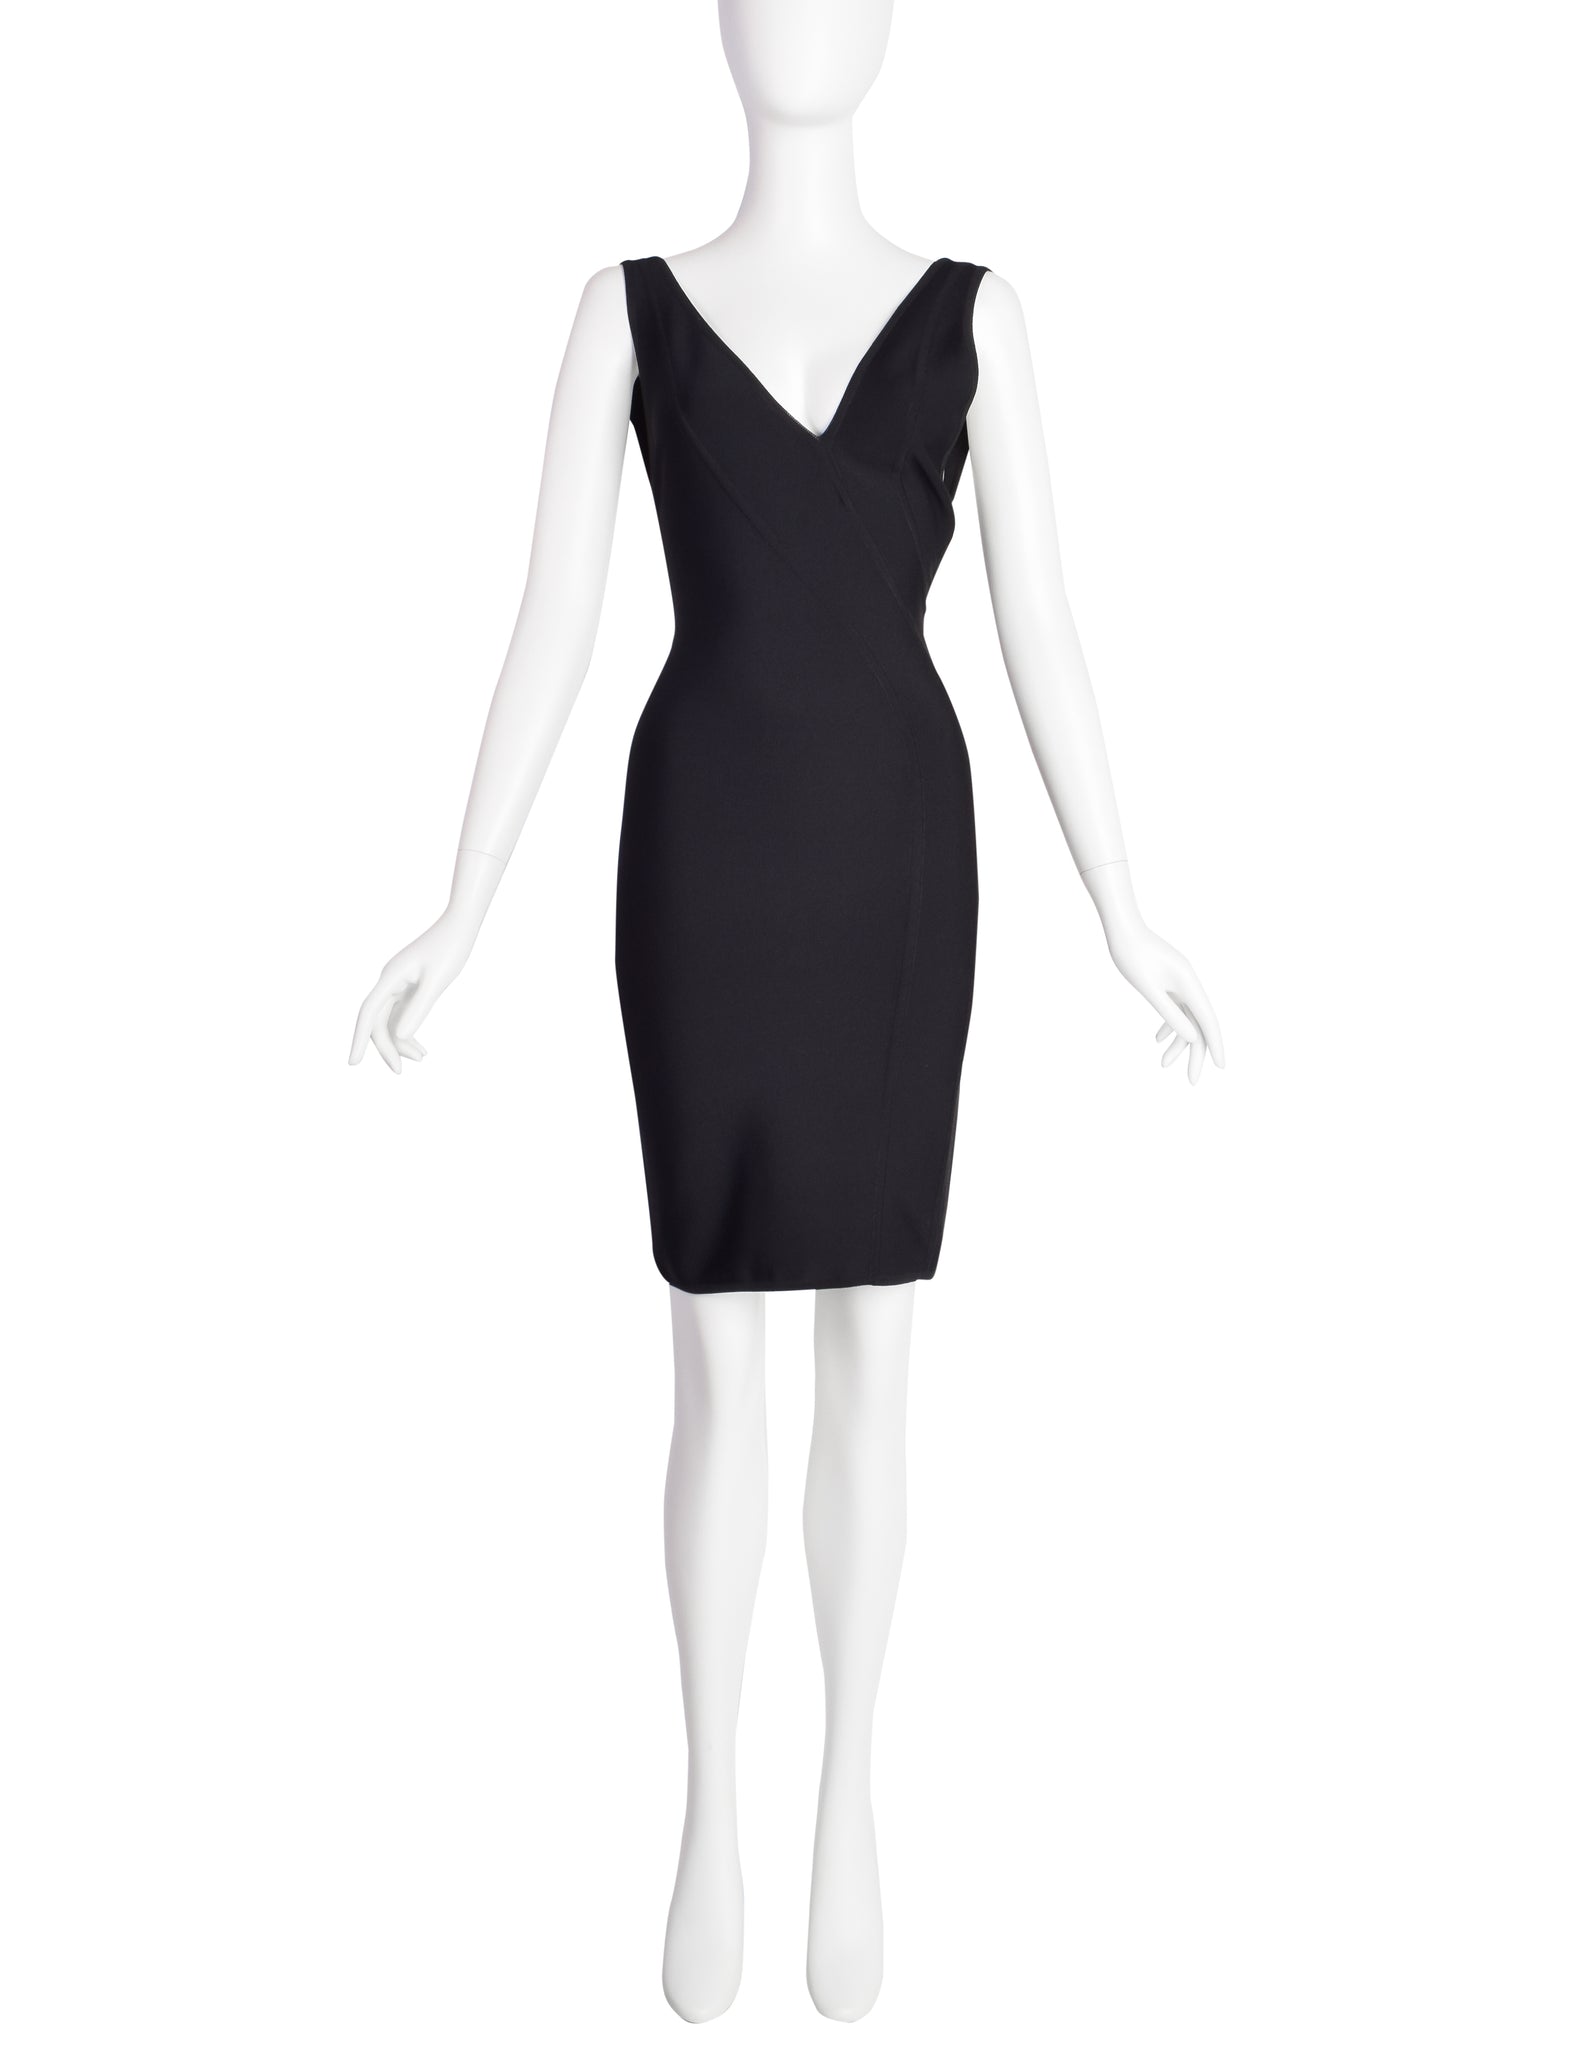 Herve L Leroux Vintage Early 2000s Asymmetric Black Stretch Knit Bodycon Mini Dress